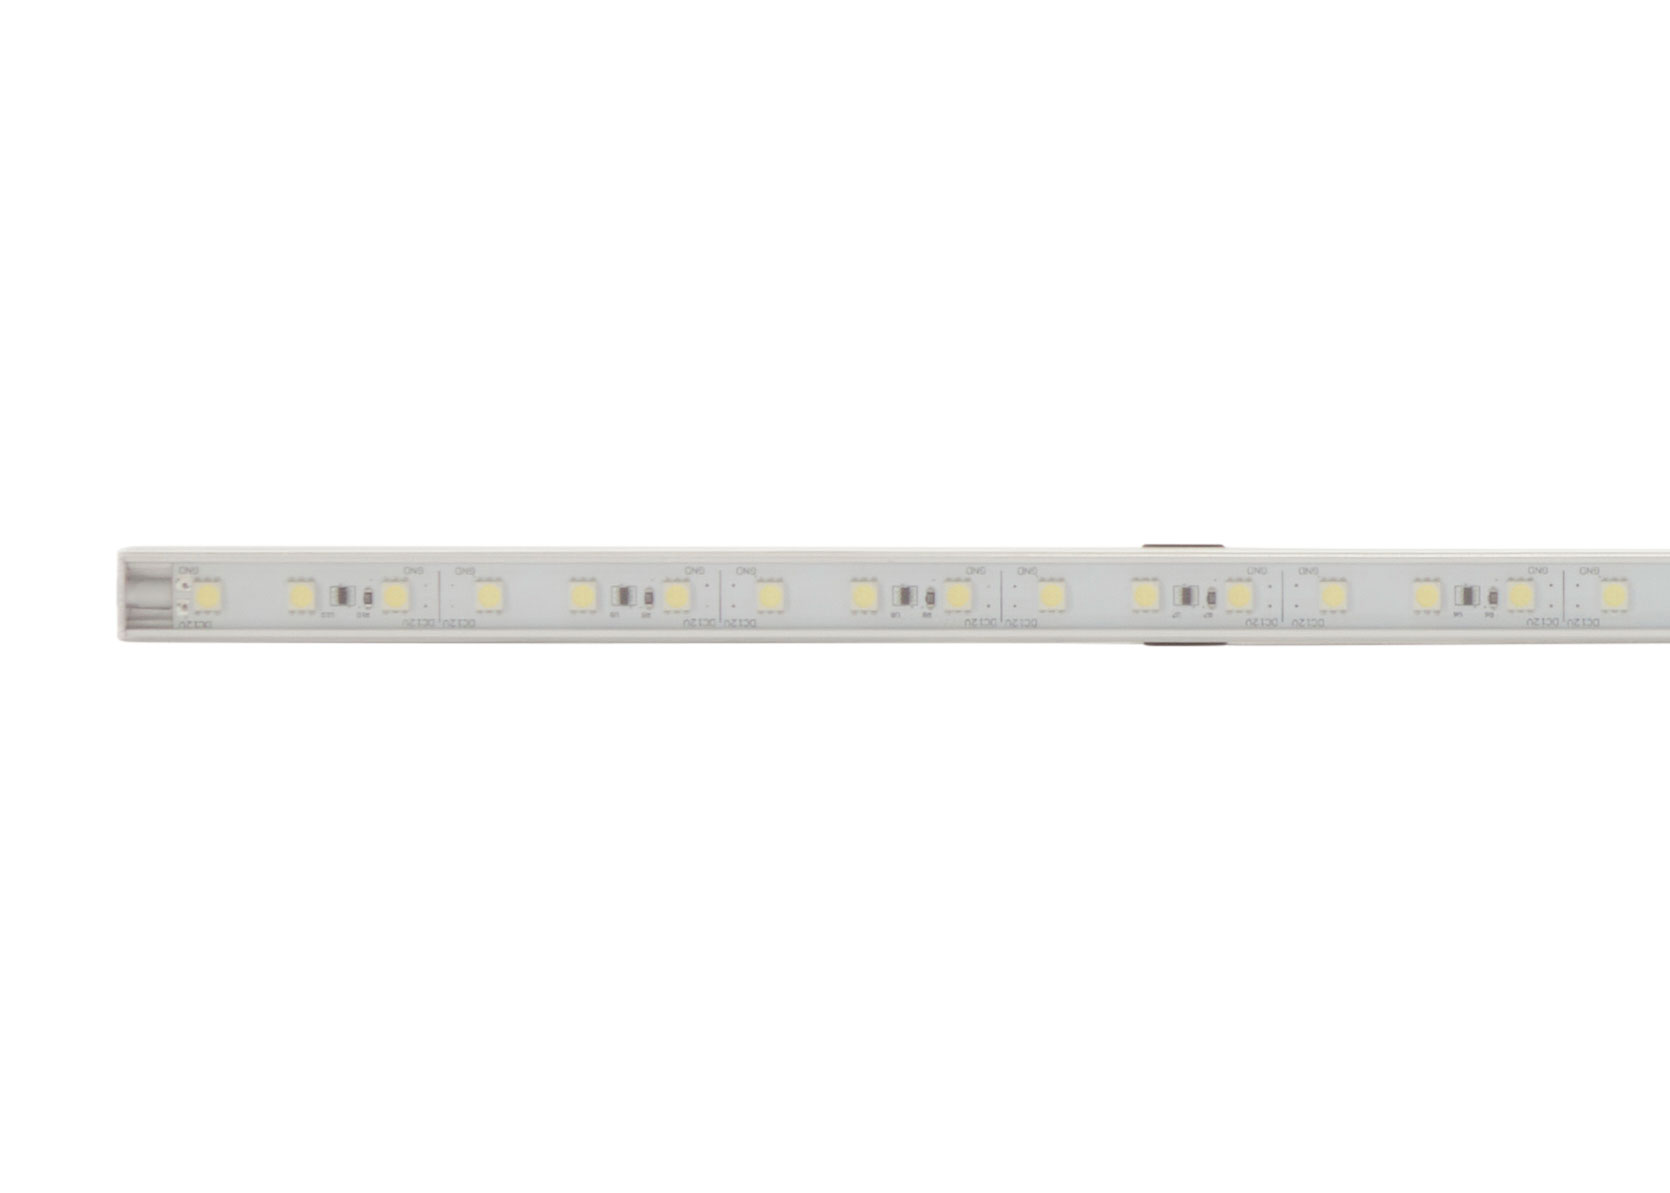 ILP Series High Power Waterproof LED Strip Light - Amber, 200mm